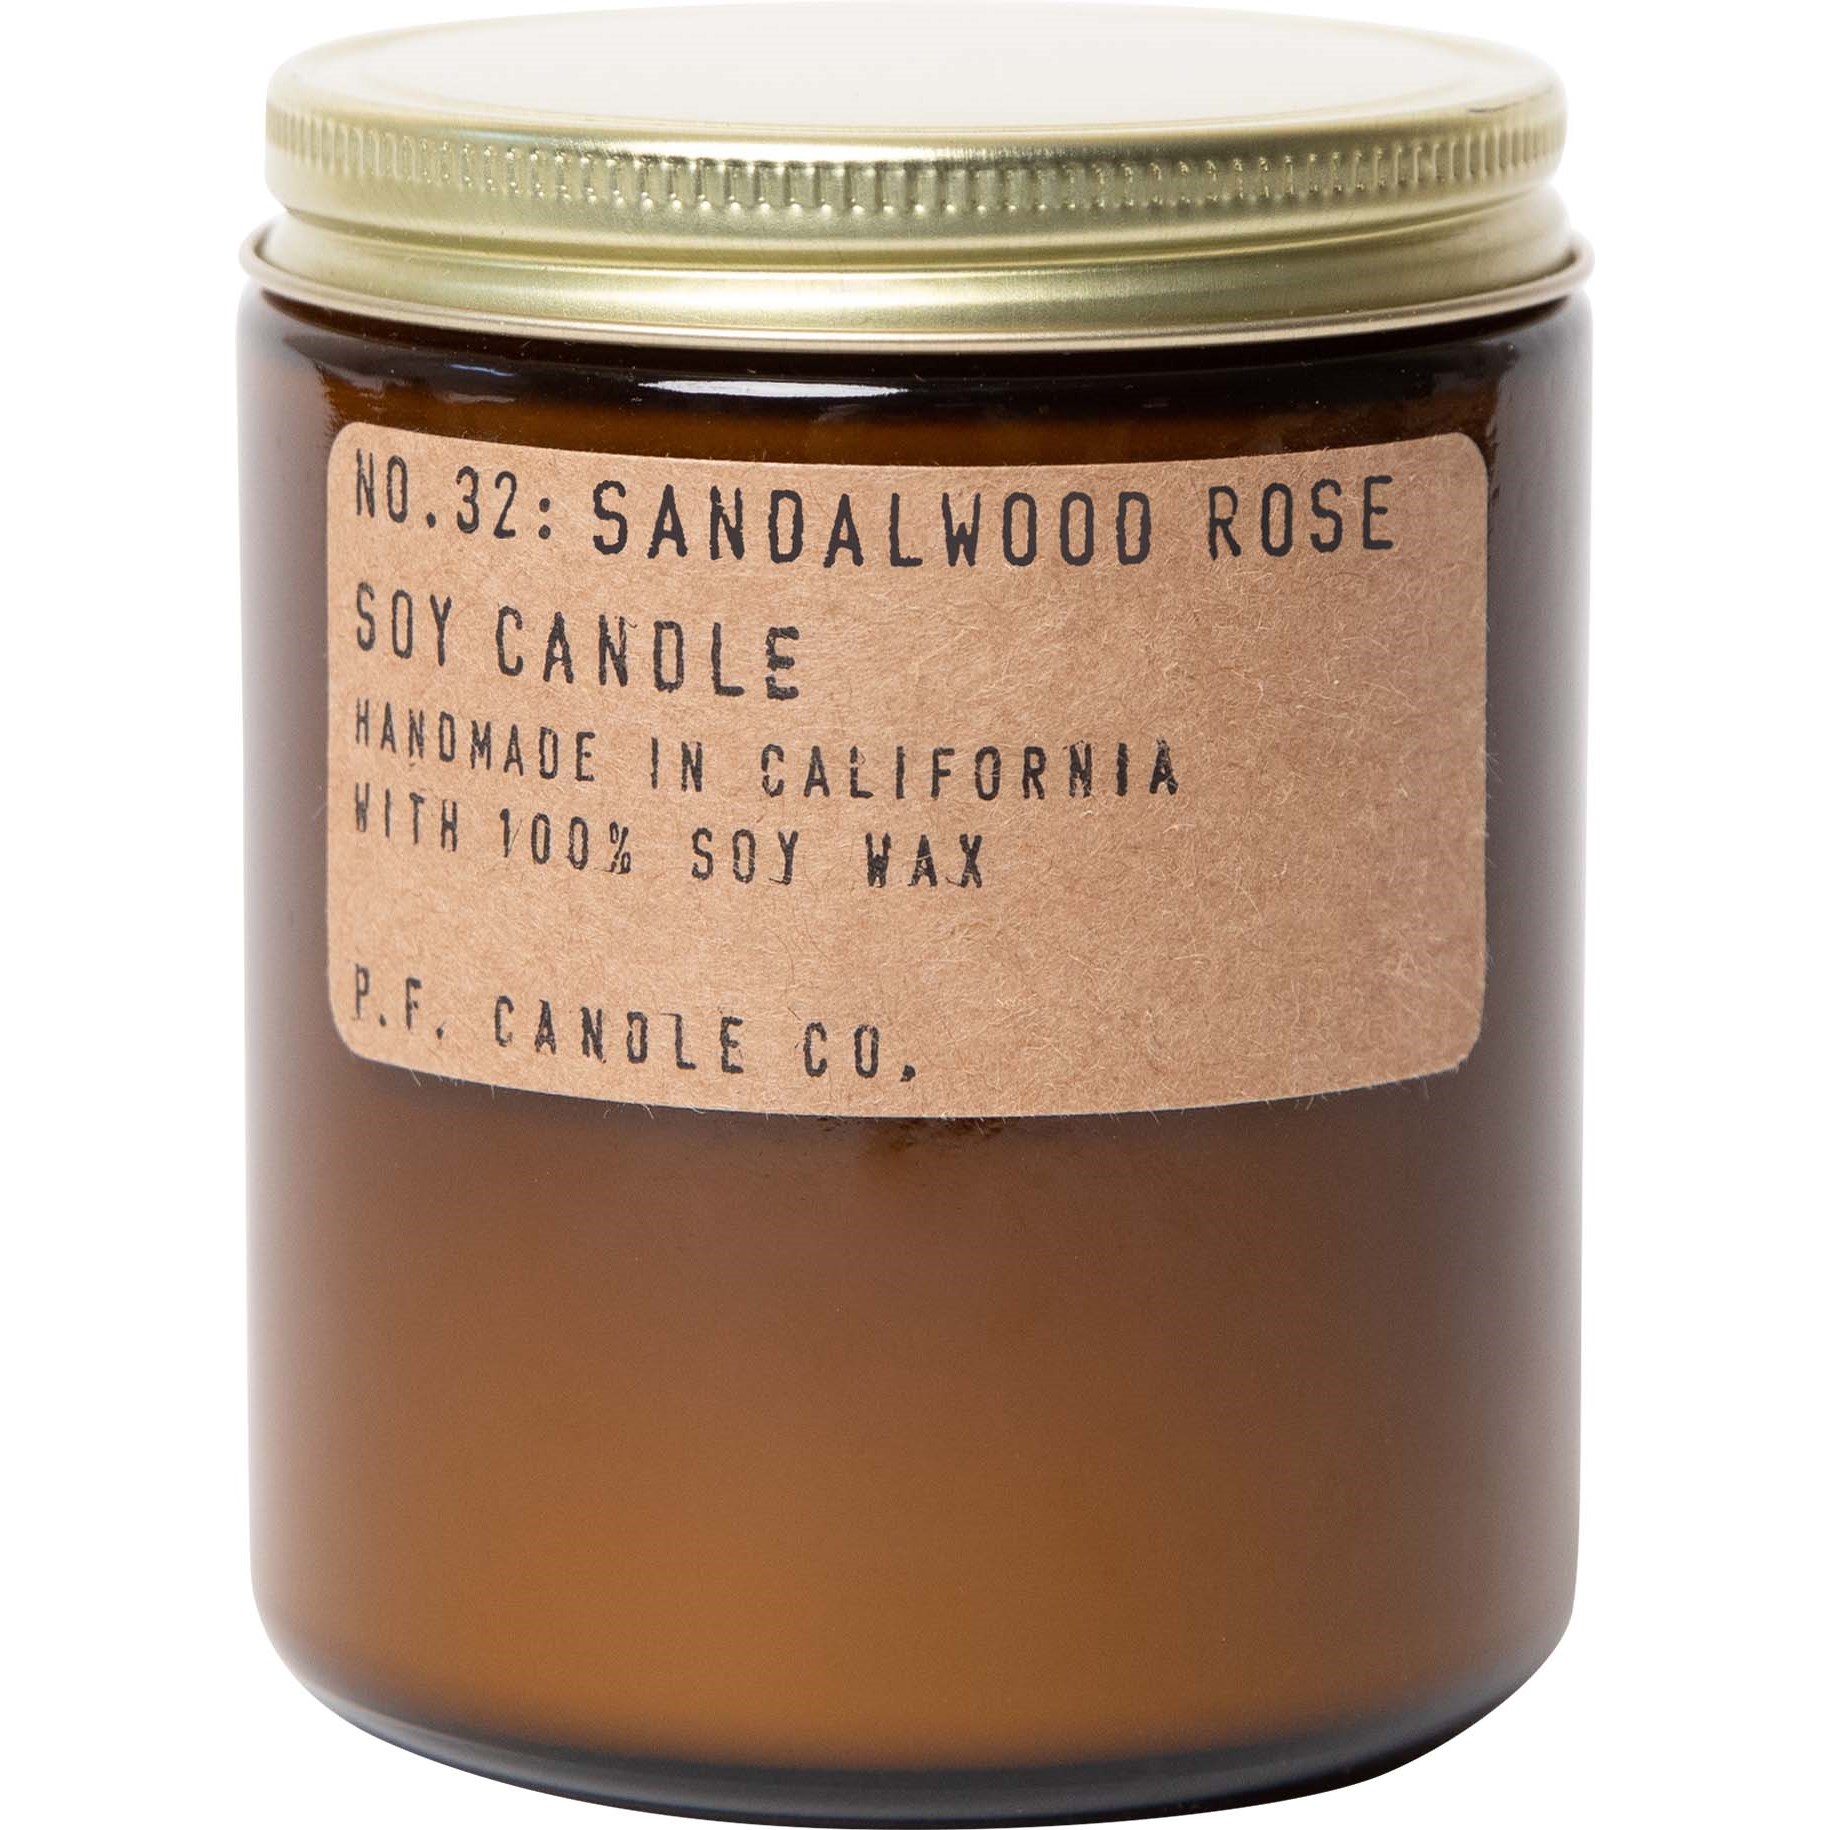 P.F. Candle Co. Sandalwood Rose soy candle 204 g